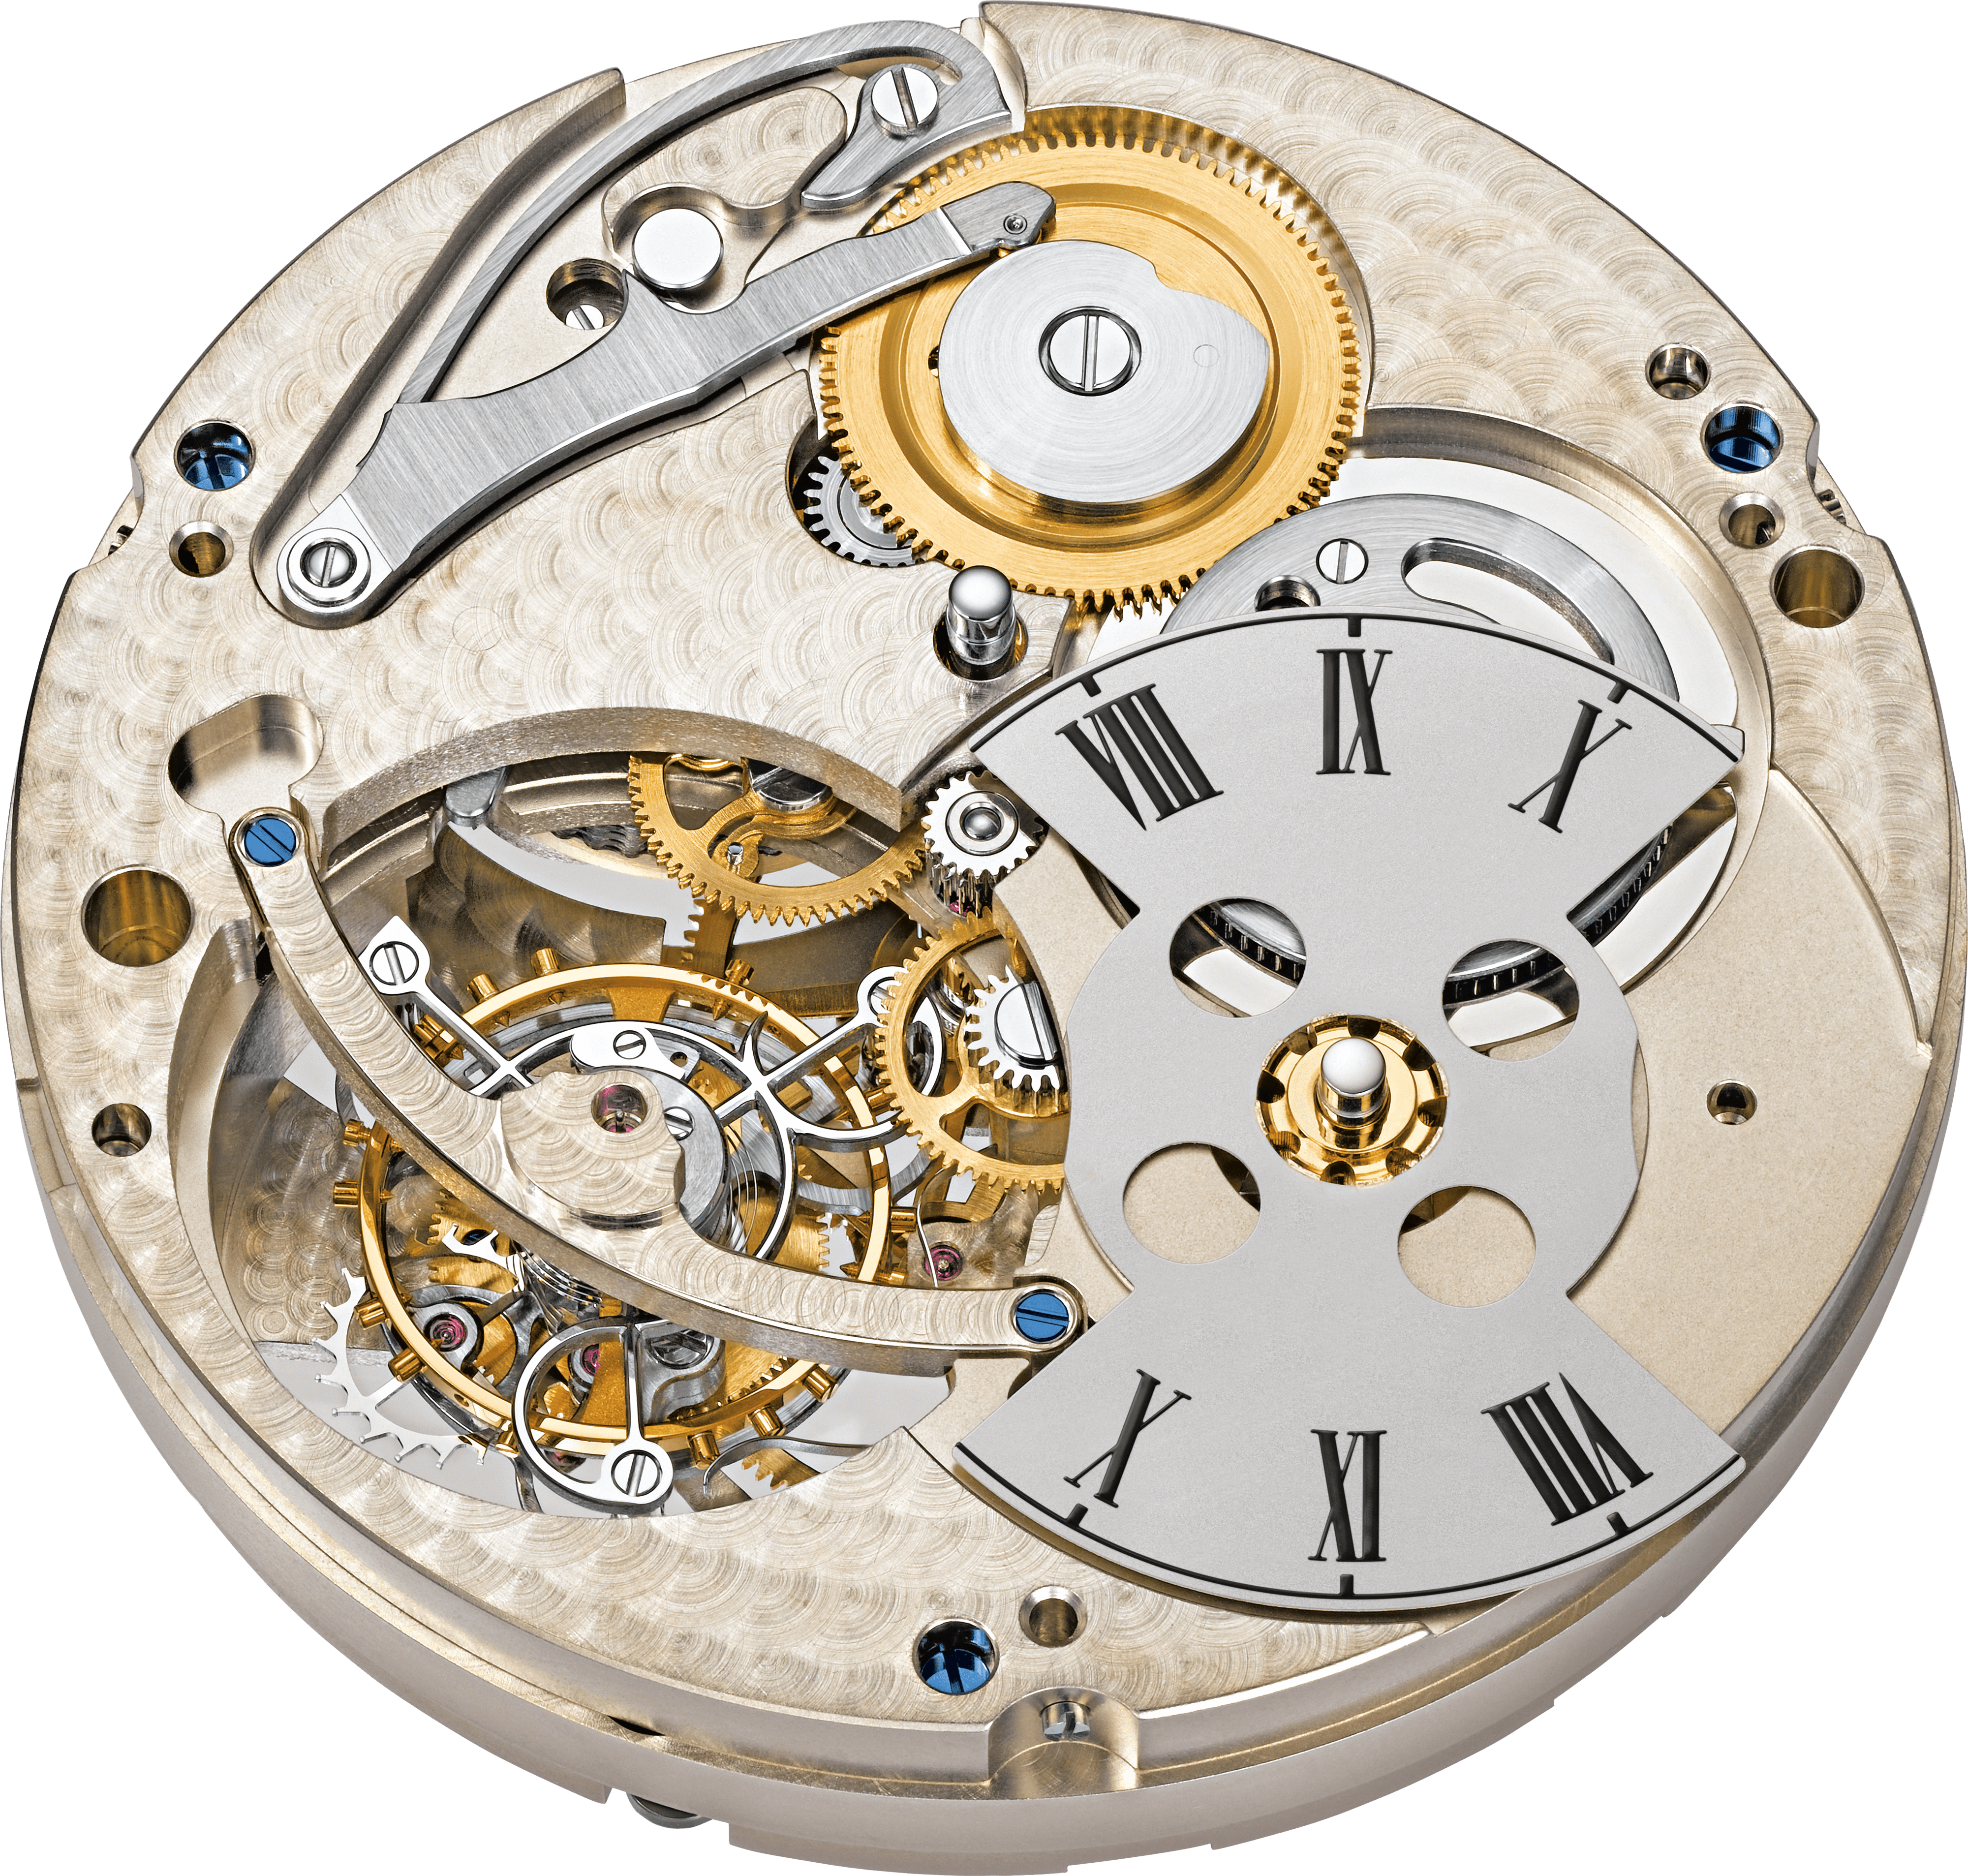 Where To Buy Replica Luxury Watches